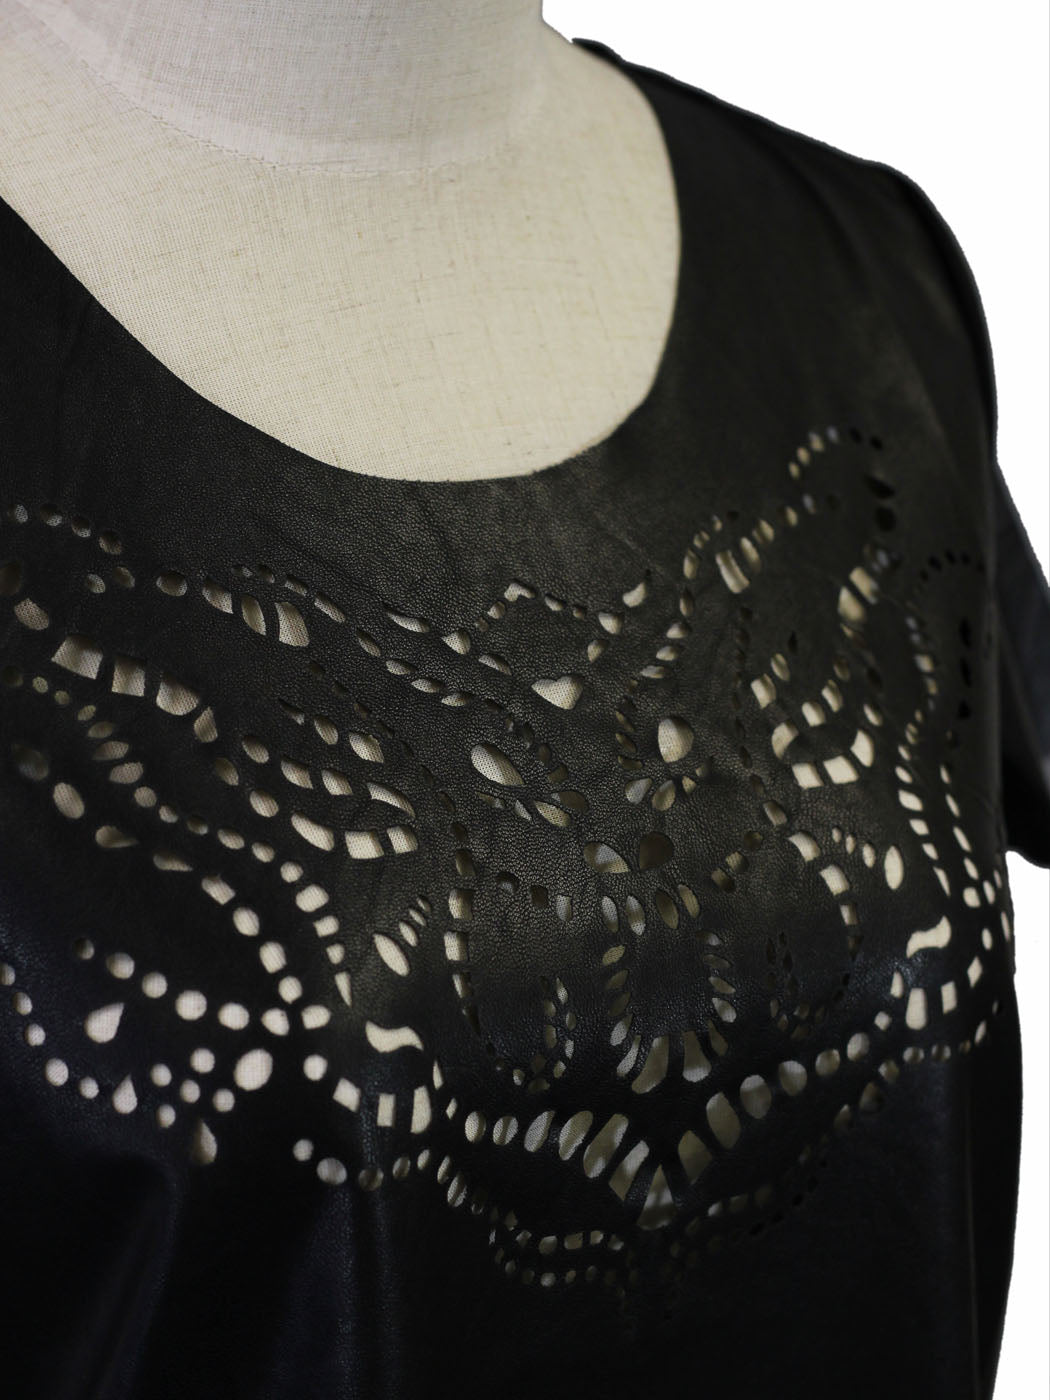 Anna-Kaci Short Sleeve Faux Leather Top With Lazercut Scoop Neckline Design - ALILANG.COM